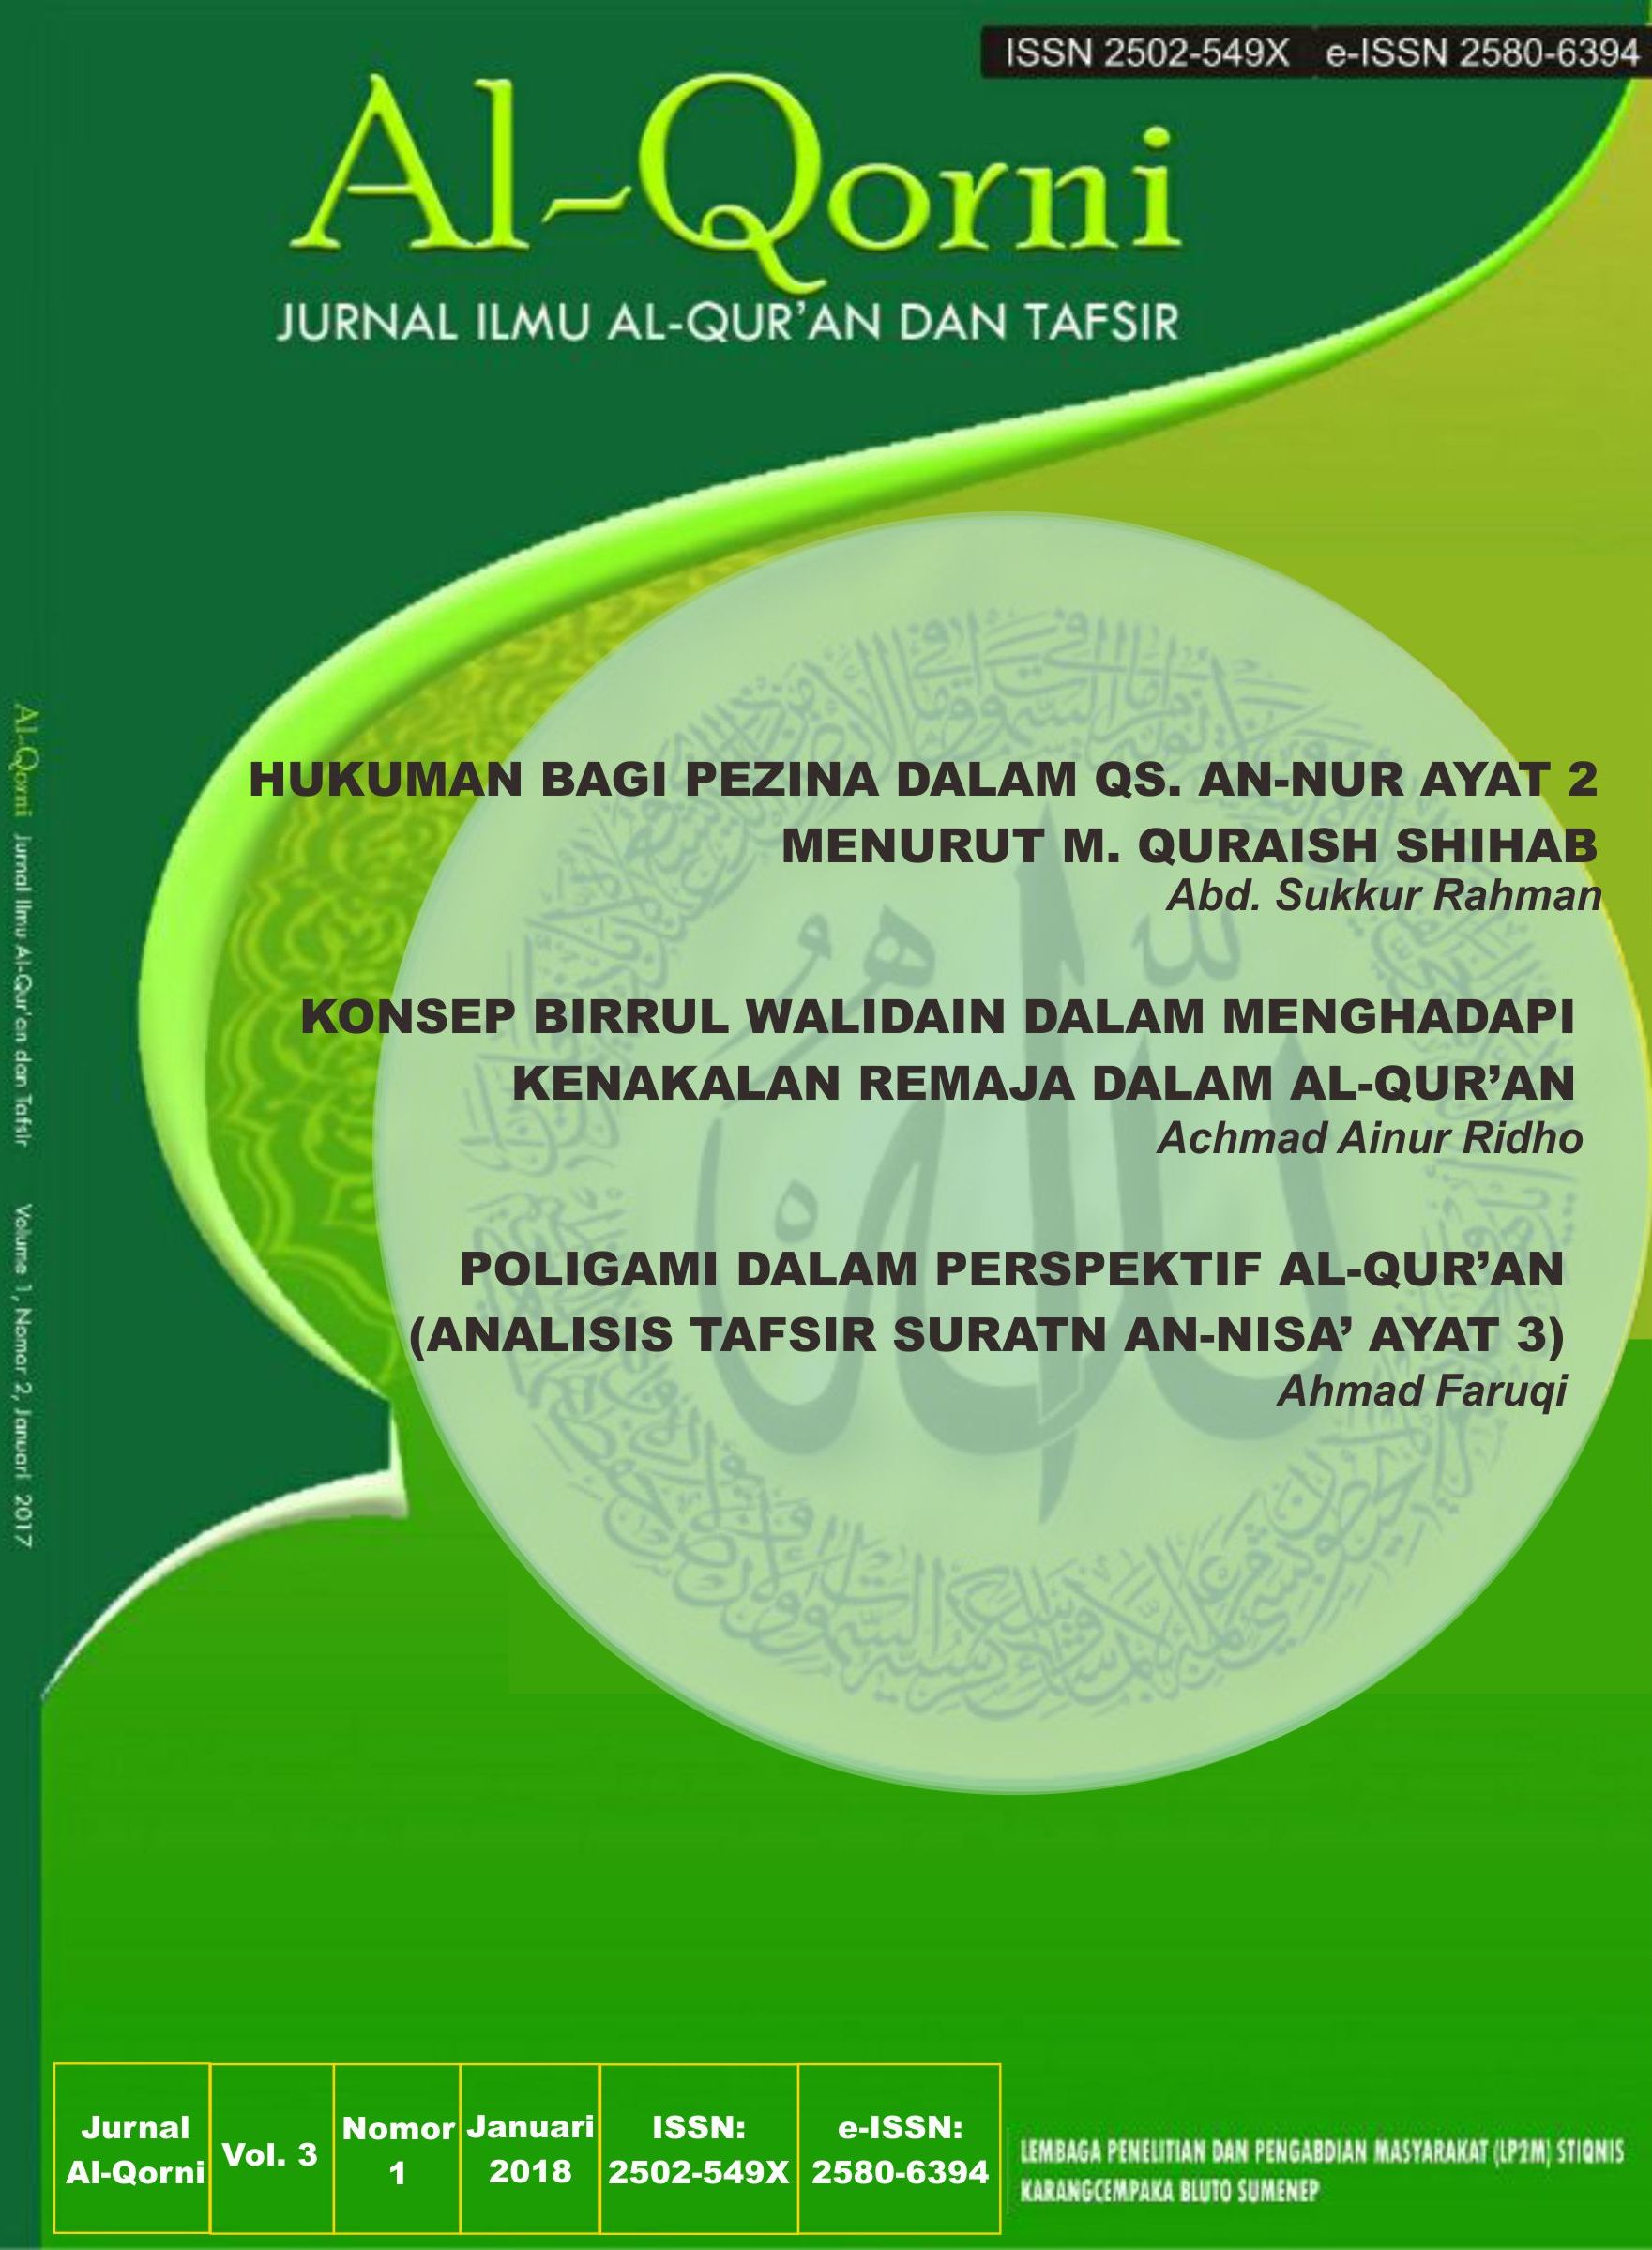 					Lihat Vol 3 No 1 (2018): Jurnal Ilmu Al-Qur'an dan Tafsir
				